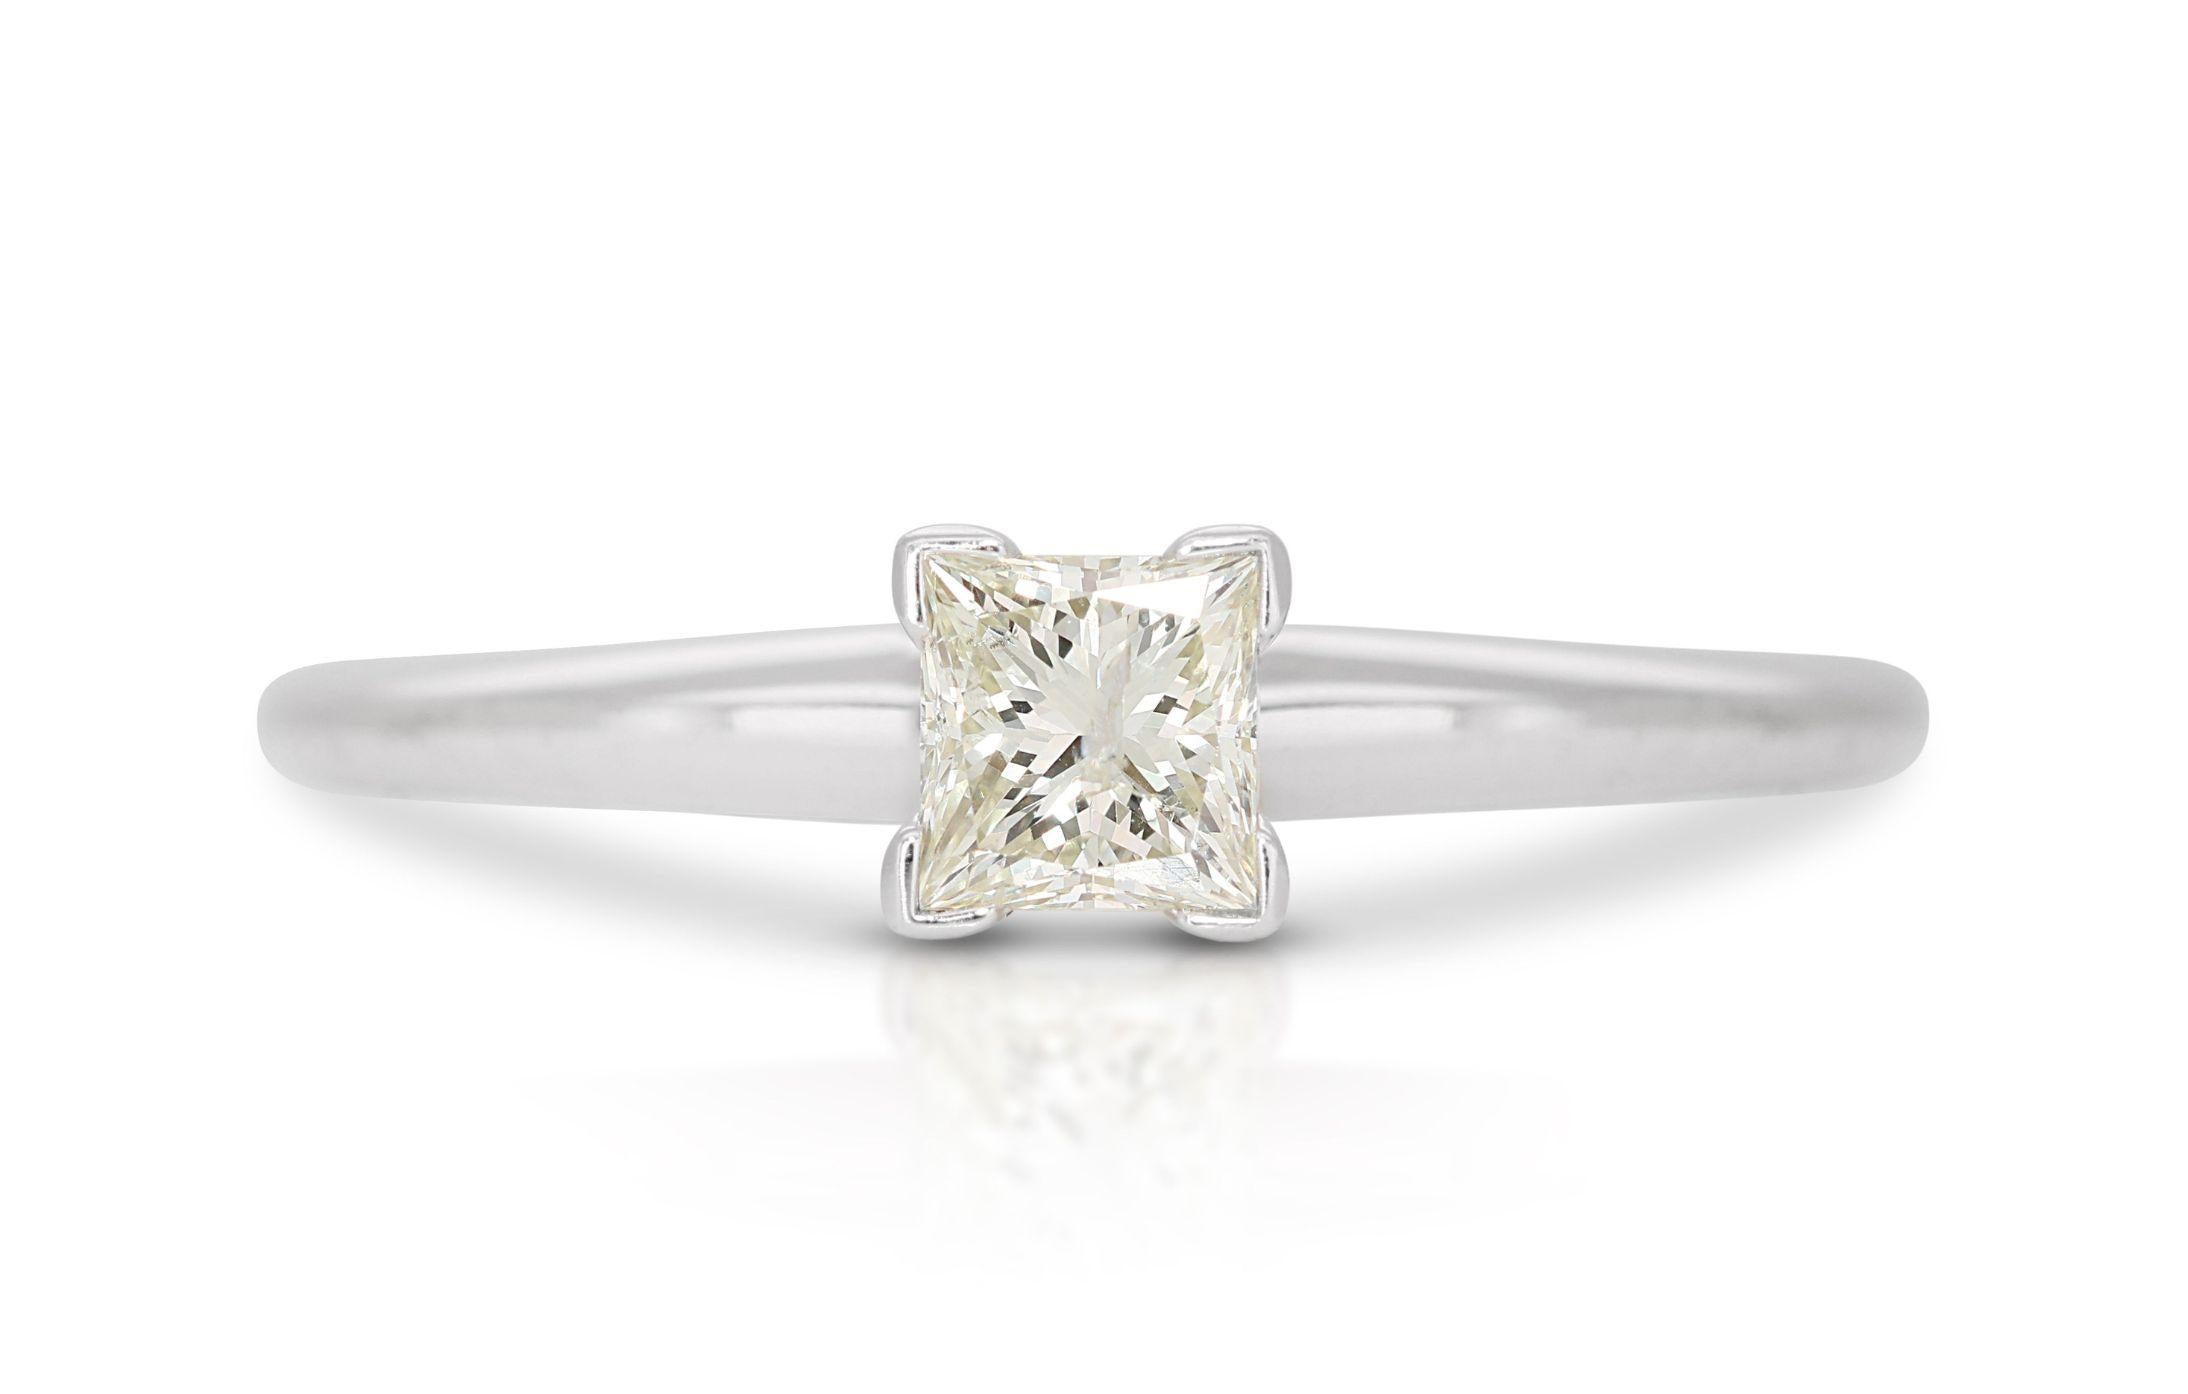 Princess Cut Princess-Cut Diamond in 14K White Gold Ring For Sale